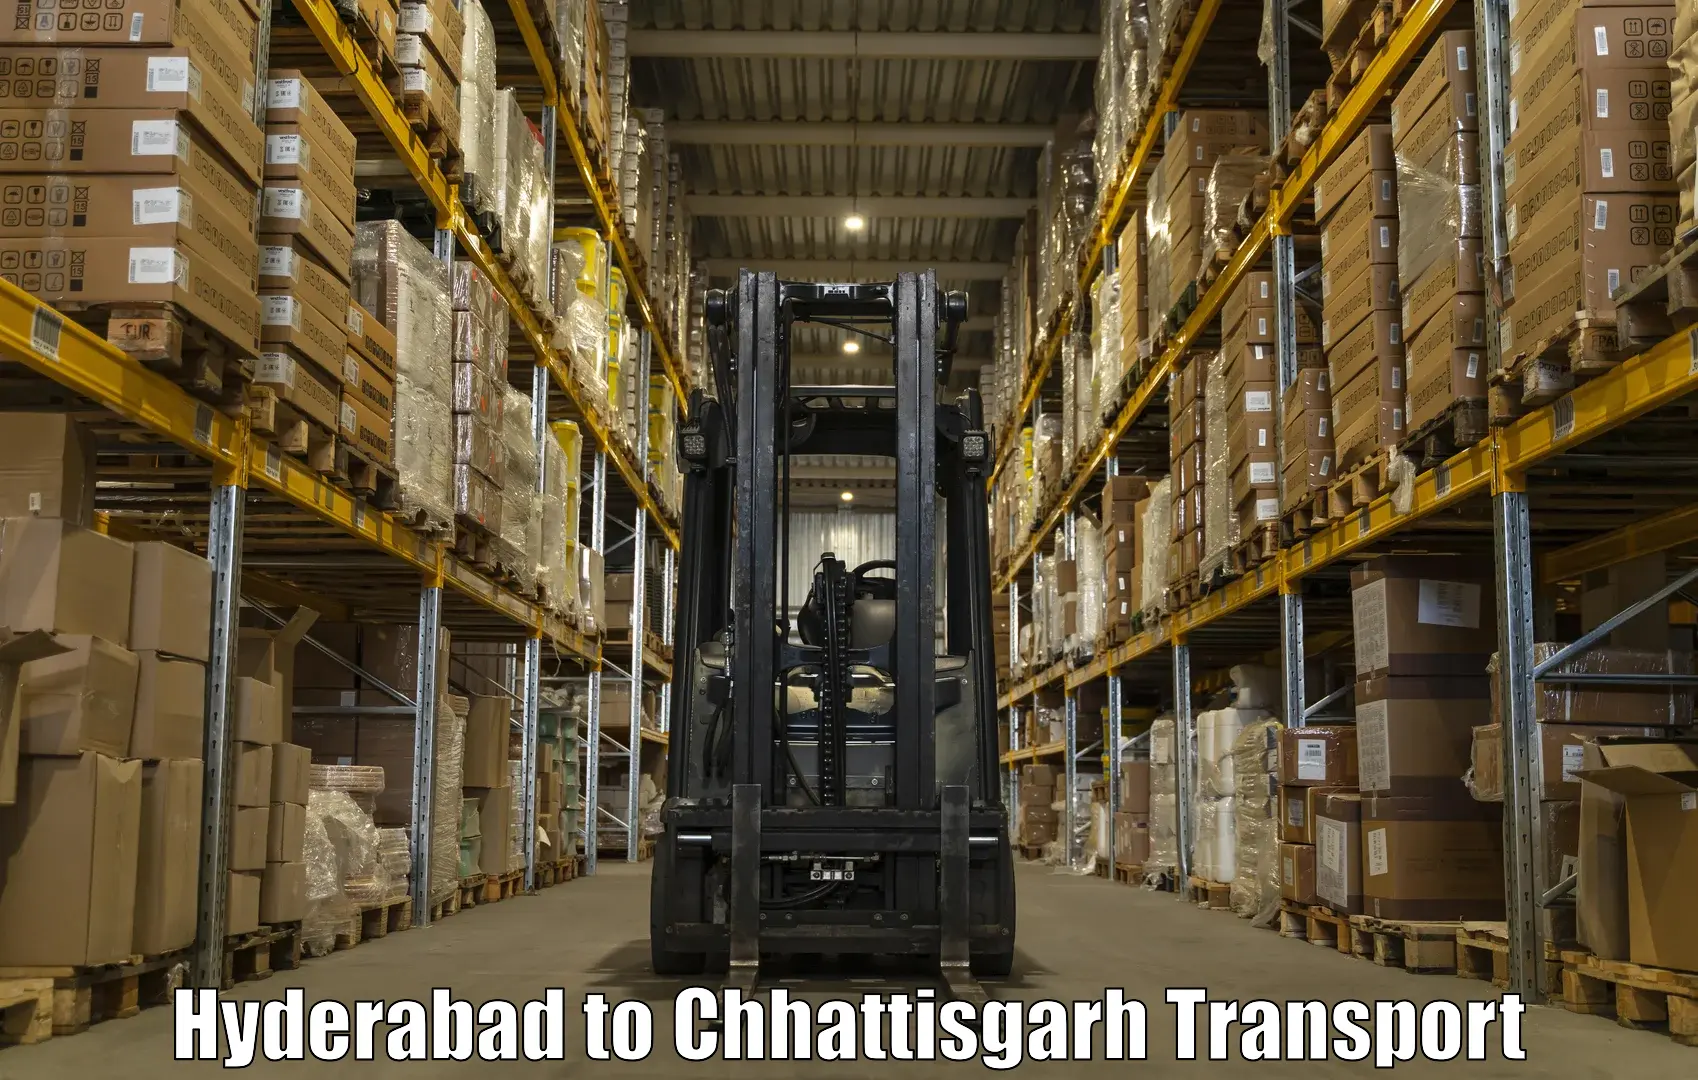 Delivery service Hyderabad to Patna Chhattisgarh